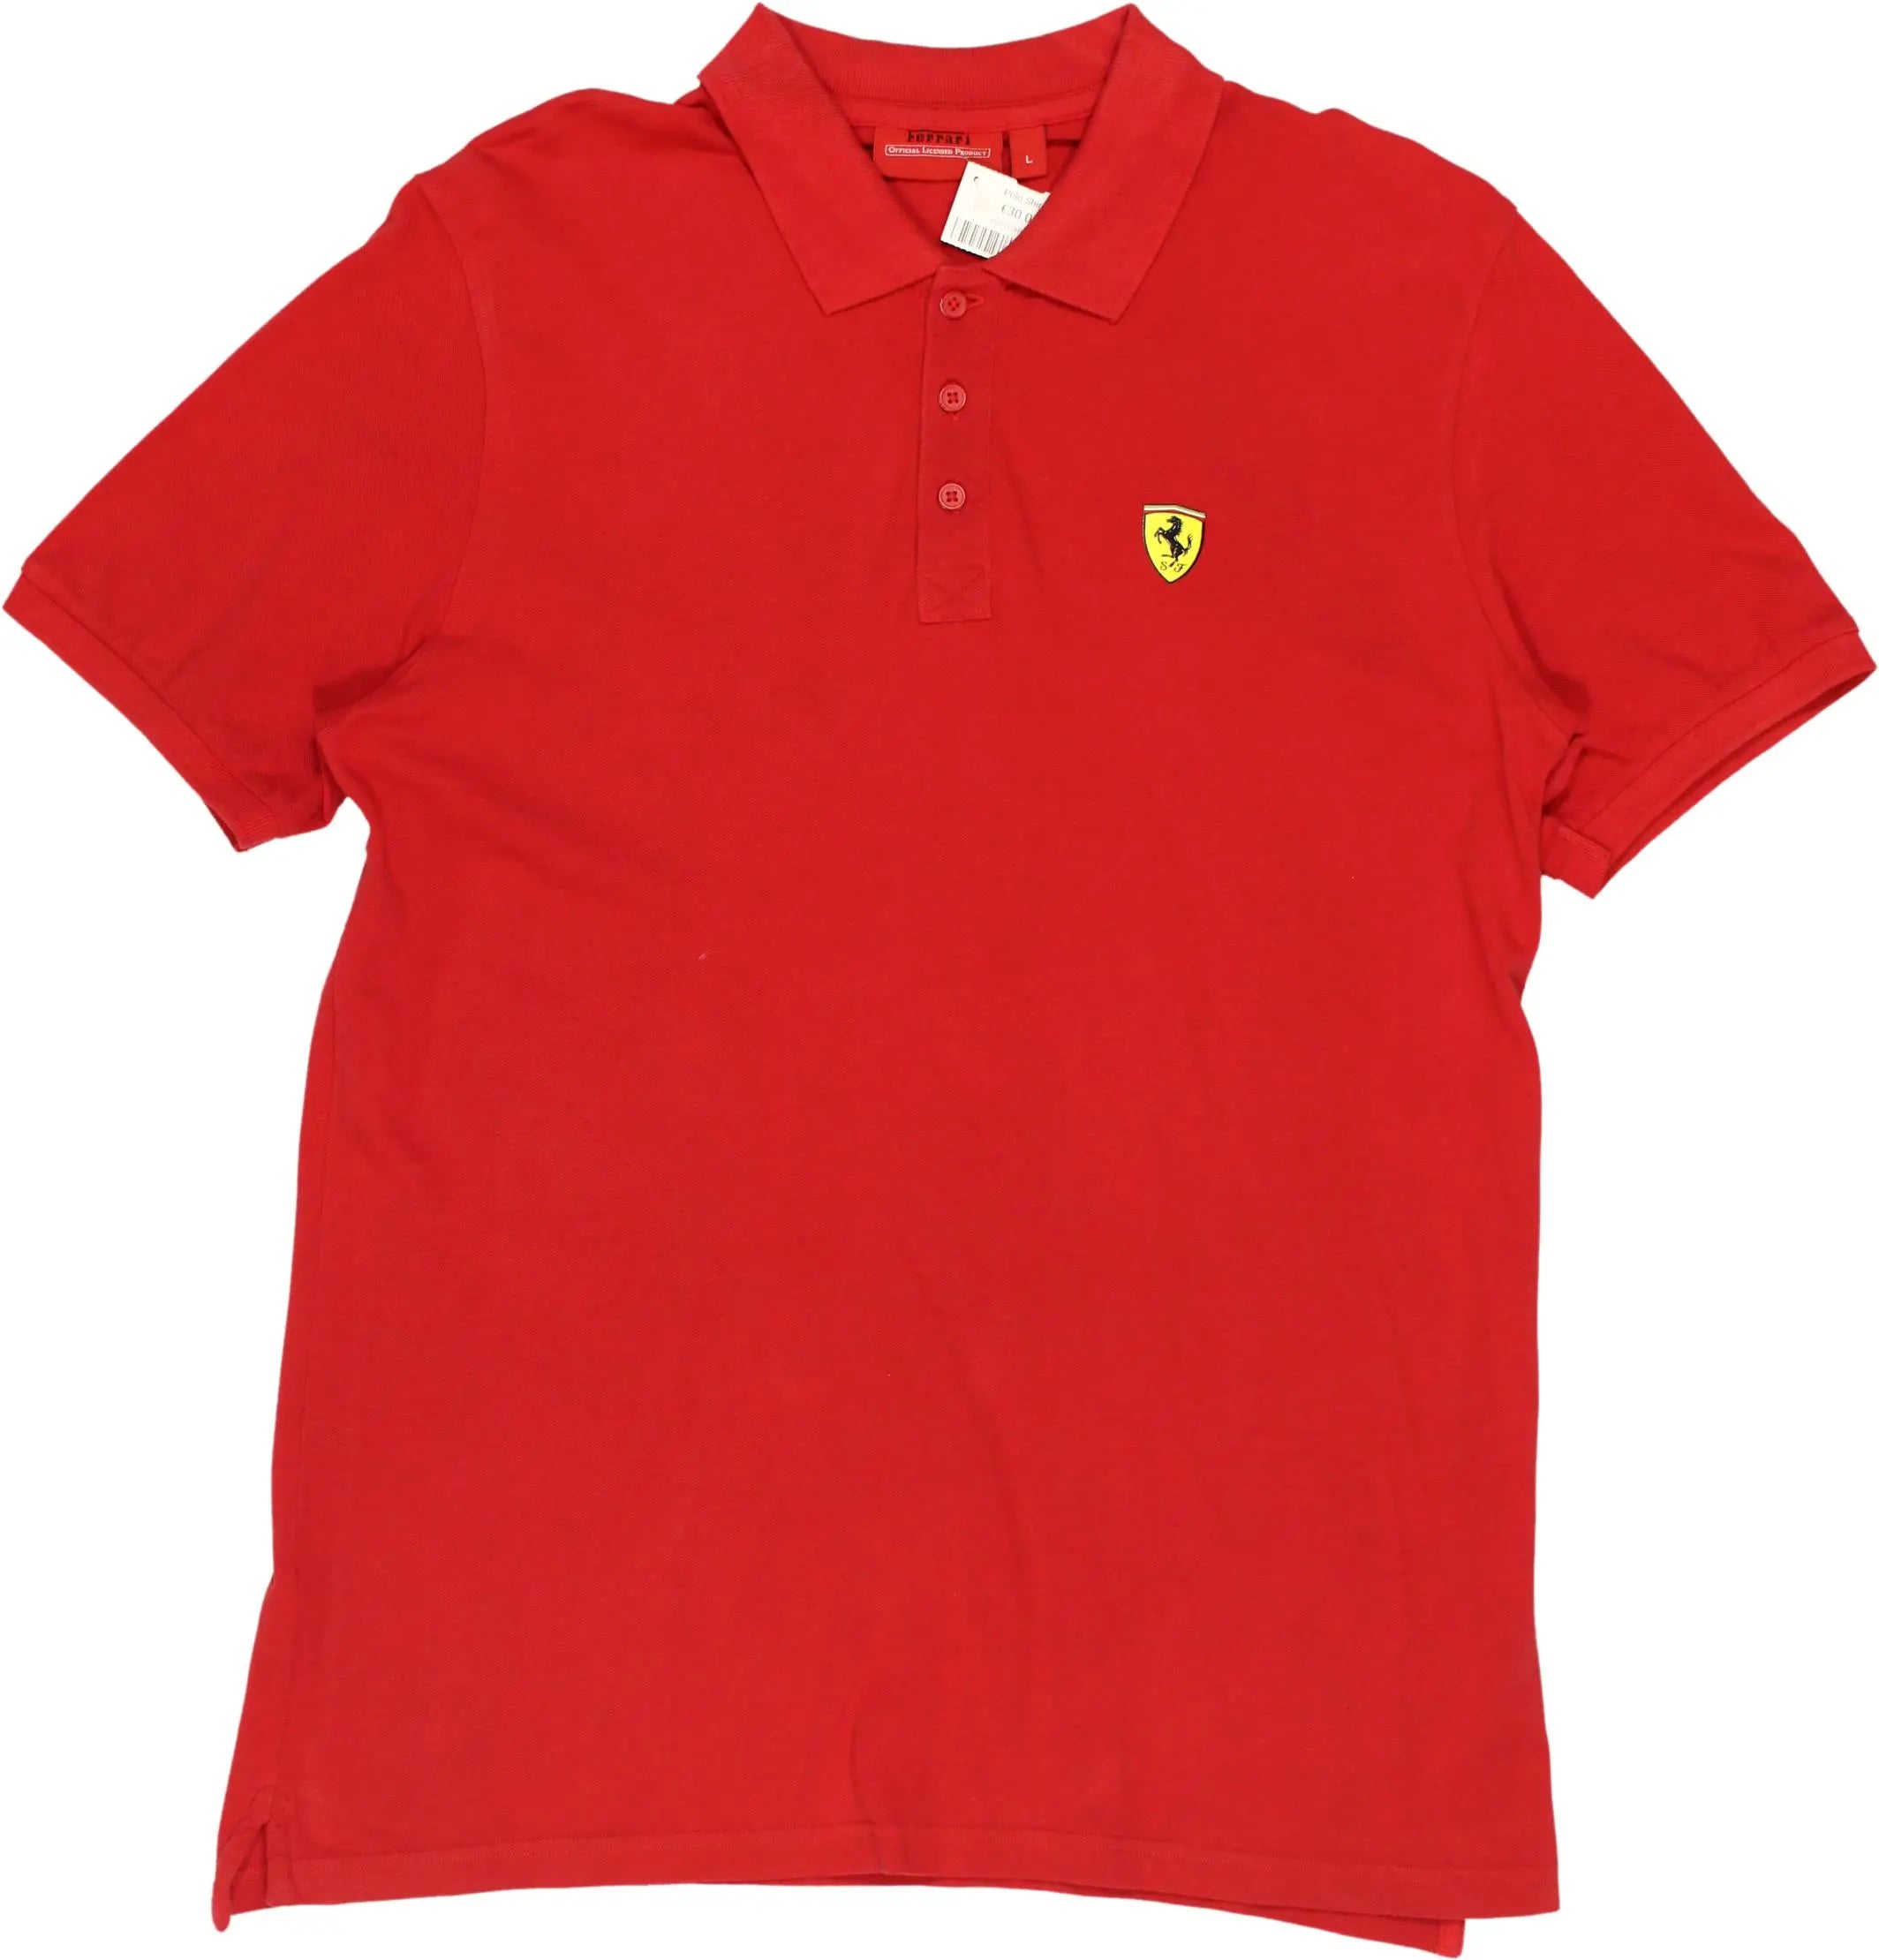 Ferrari - Ferrari Polo- ThriftTale.com - Vintage and second handclothing